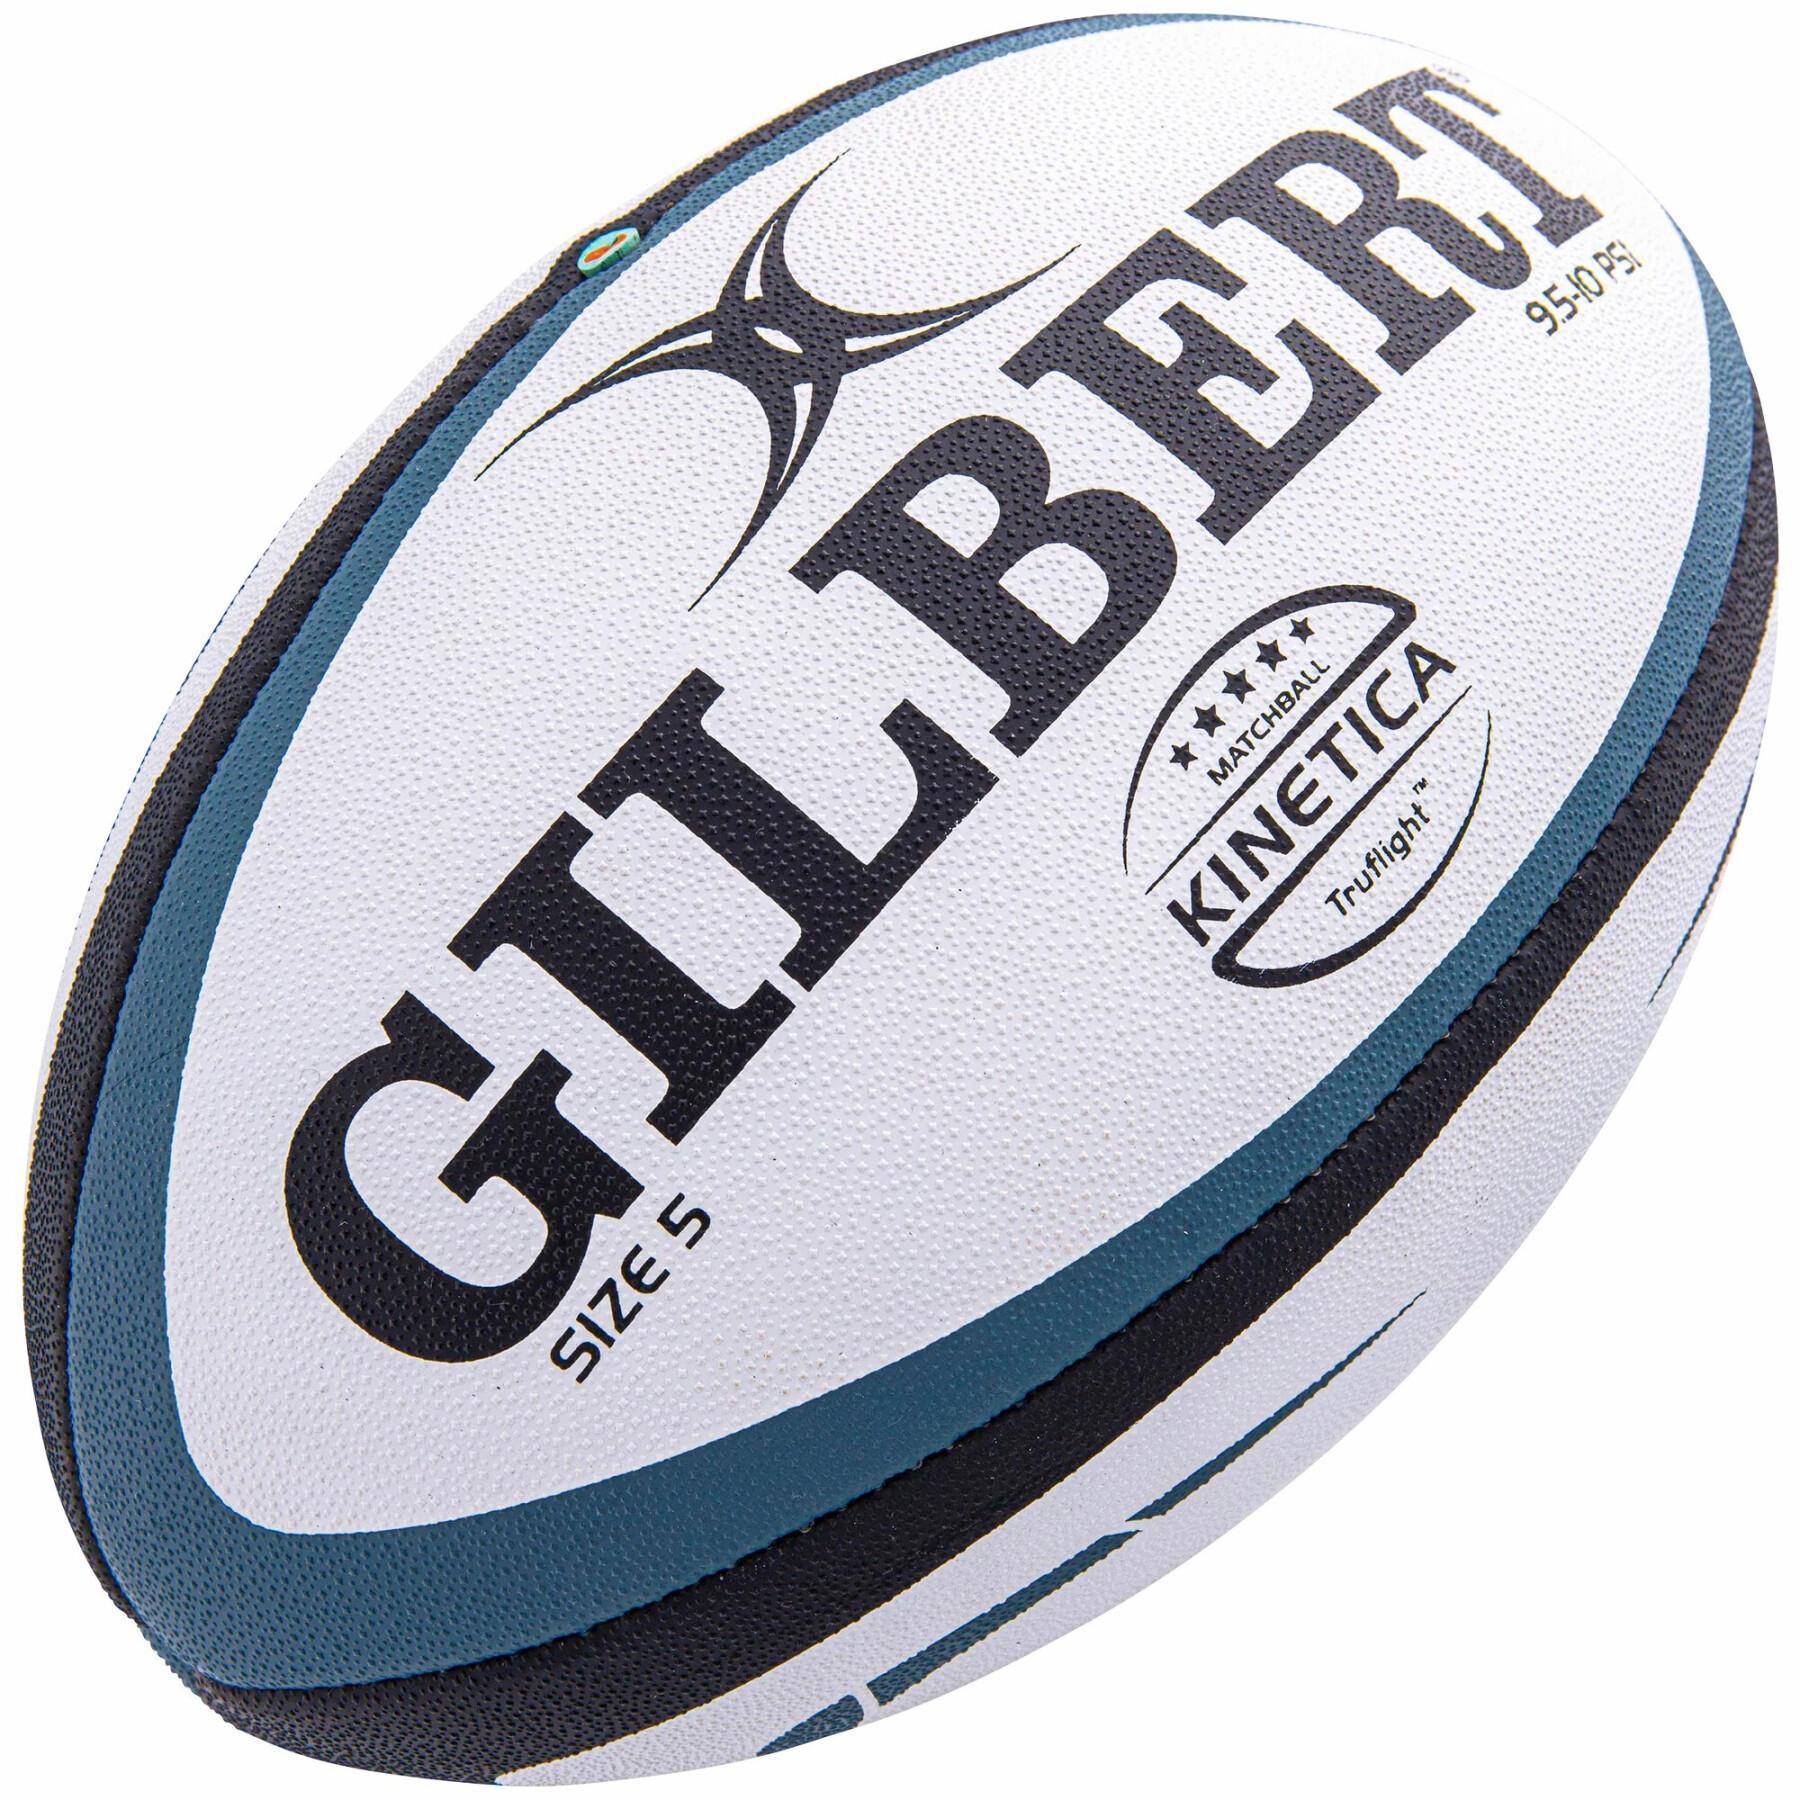 Piłka do rugby Gilbert Kinetica